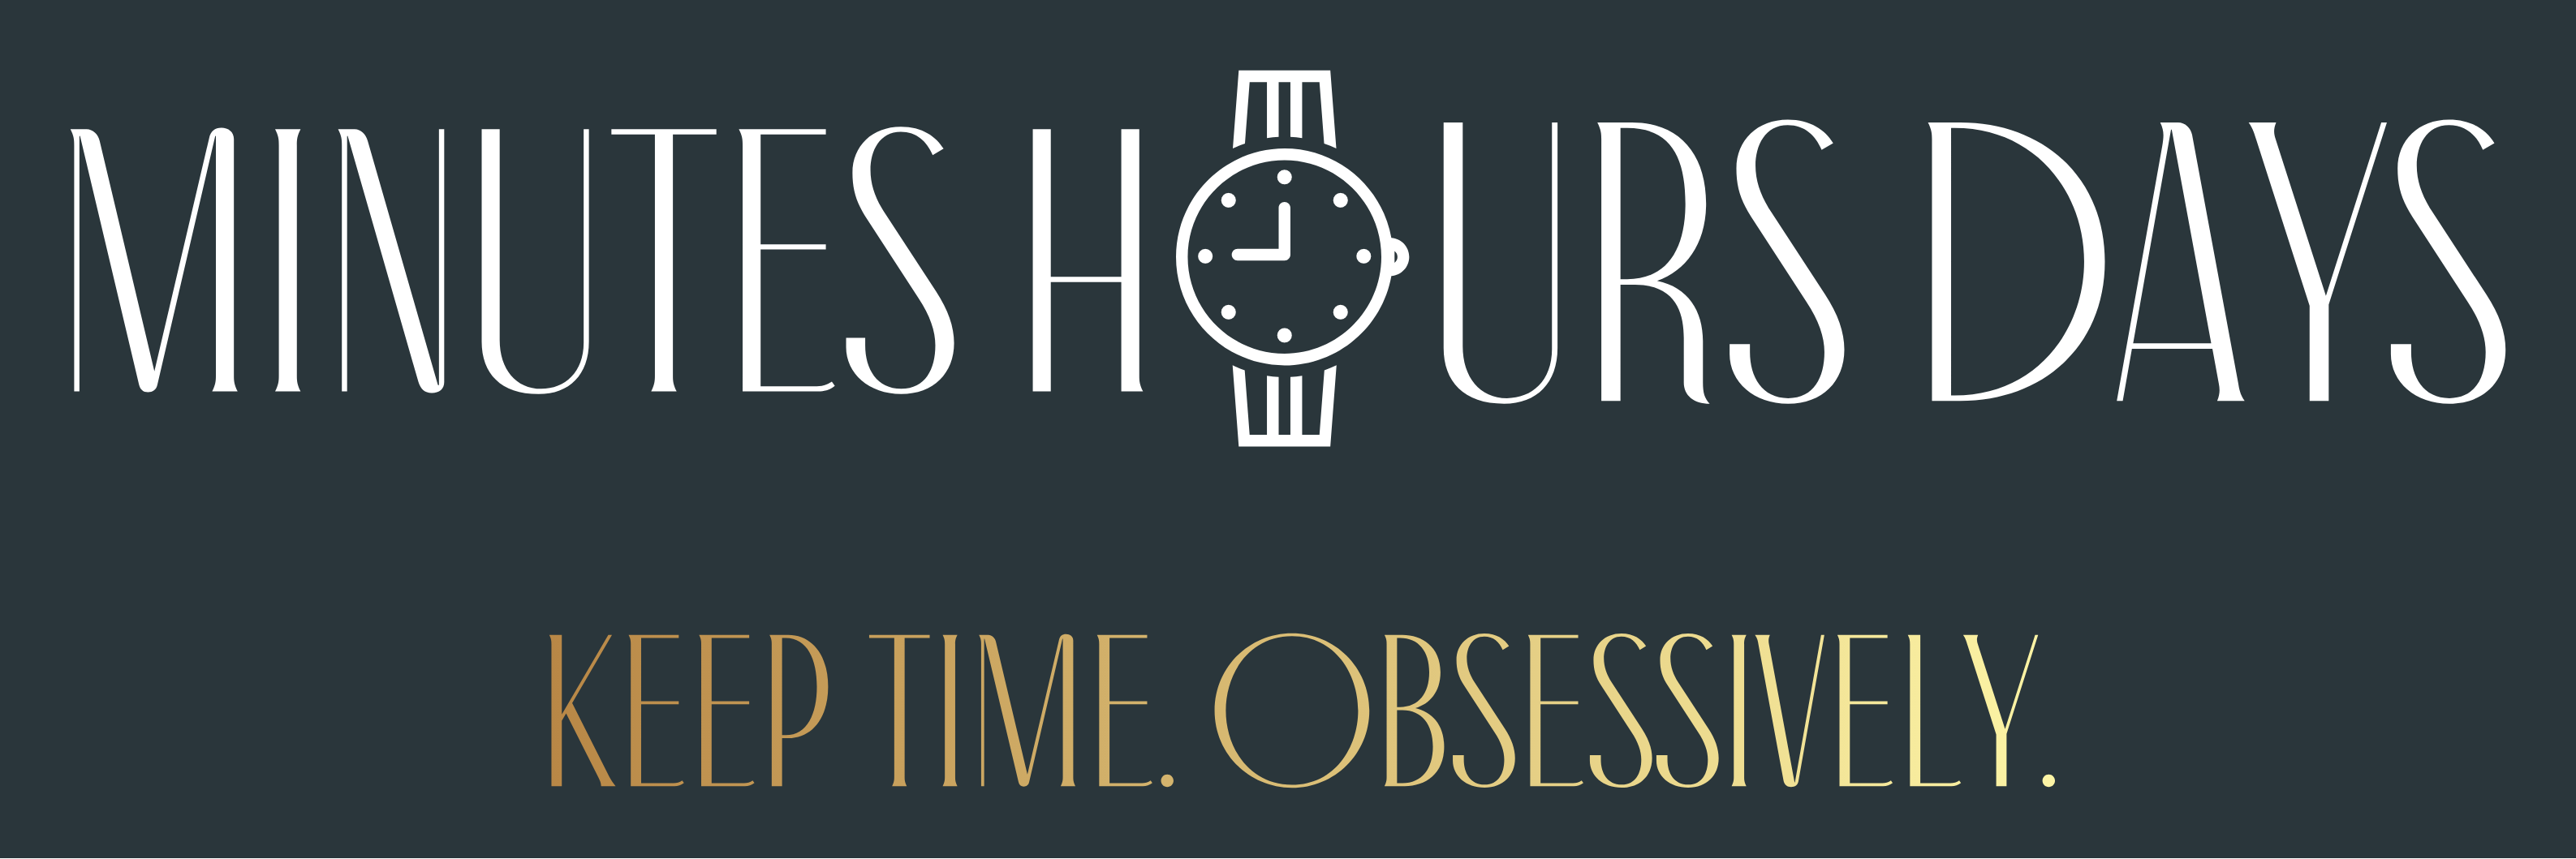 Keep Time. Obsessively. Logo